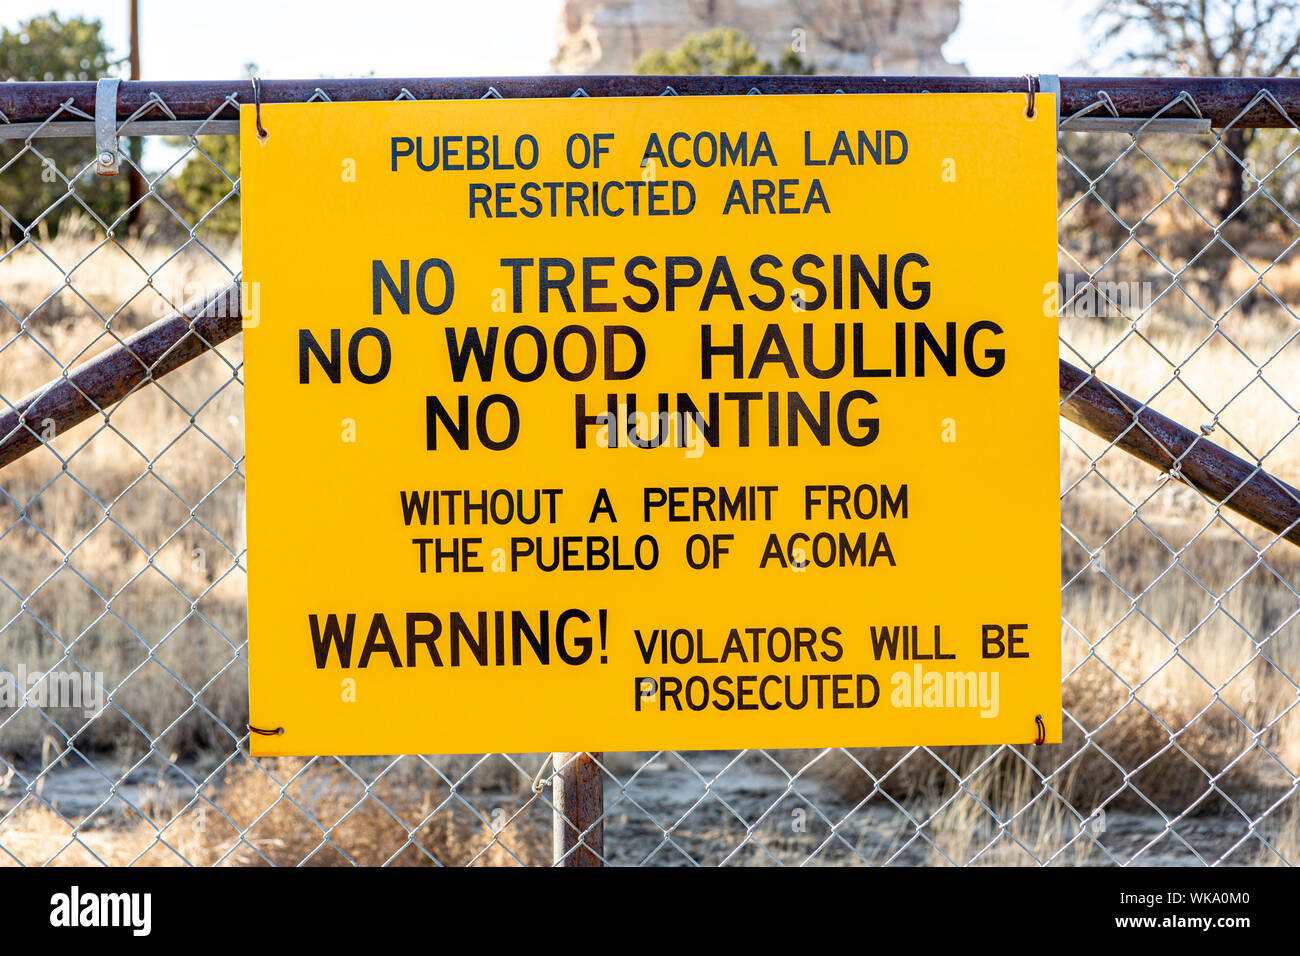 A Pueblo of Acoma warning sign Stock Photo